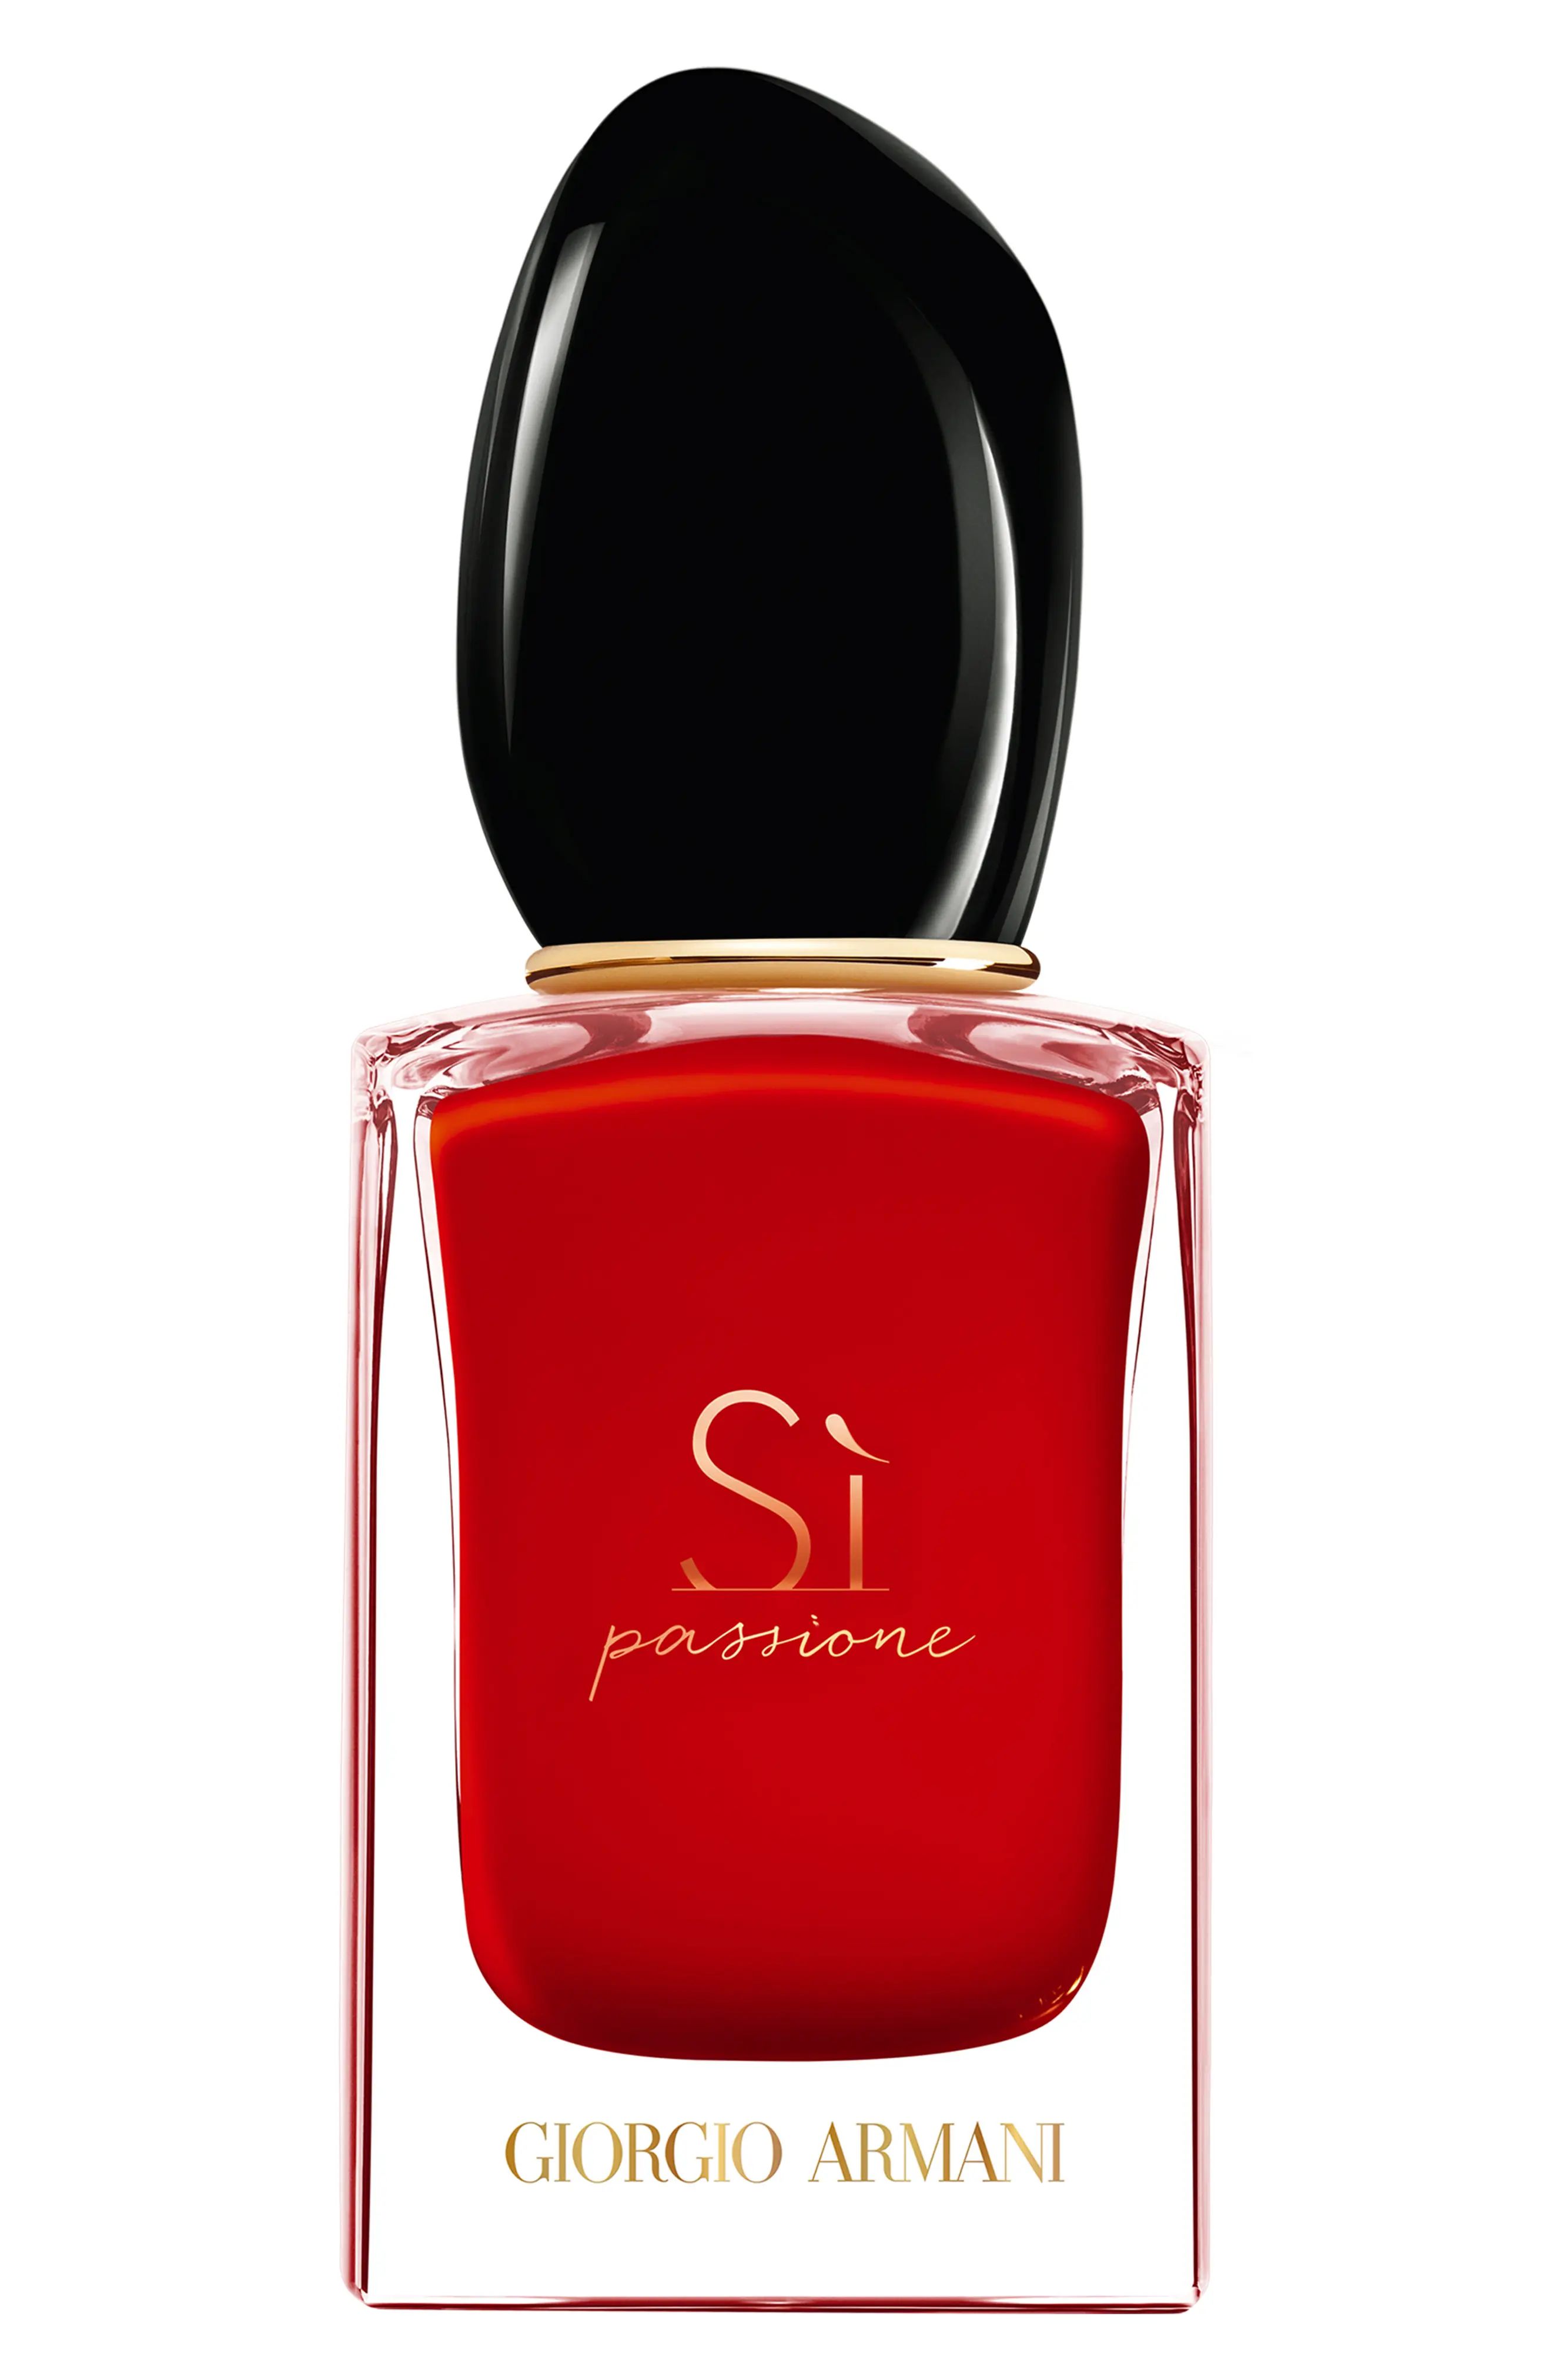 Giorgio Armani Si Passione Eau de Parfum Fragrance, Size 3.4 Oz at Nordstrom | Nordstrom